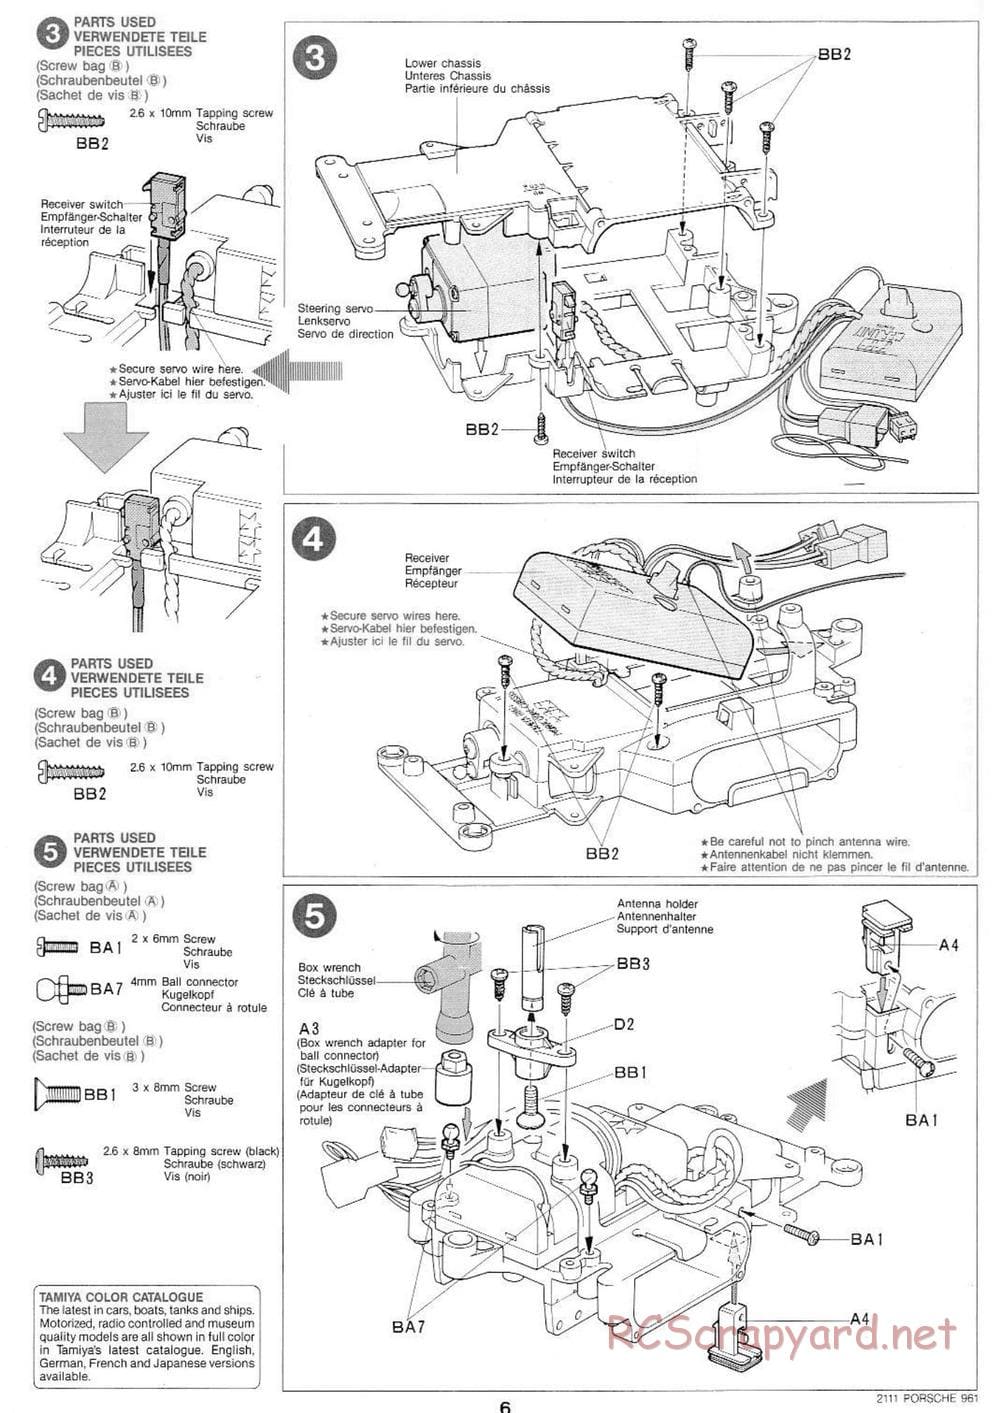 Tamiya - Tamtech - Porsche 961 Chassis - Manual - Page 6